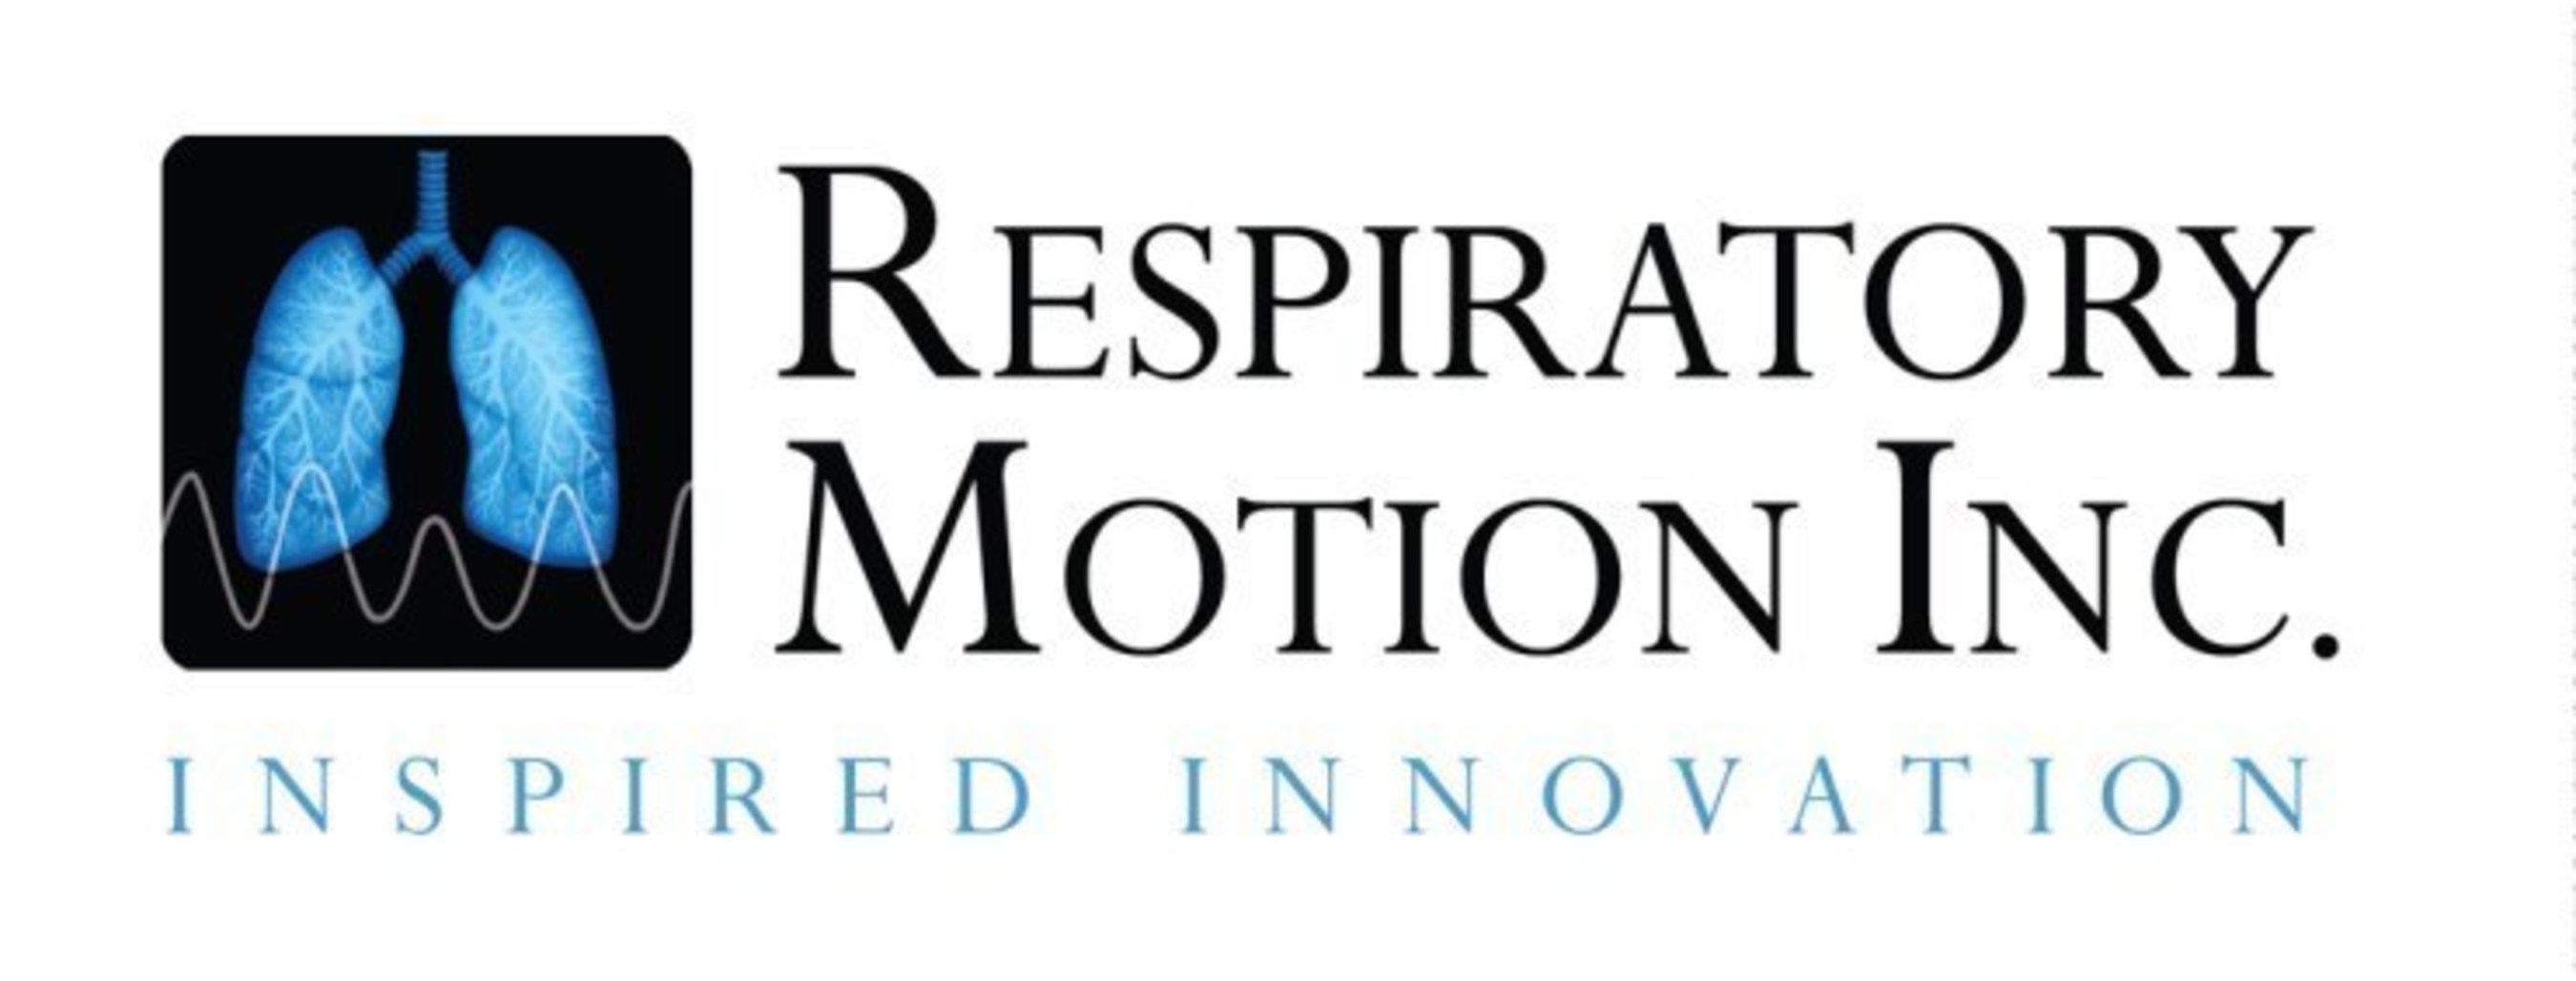 Respiratory Motion, Inc. Logo